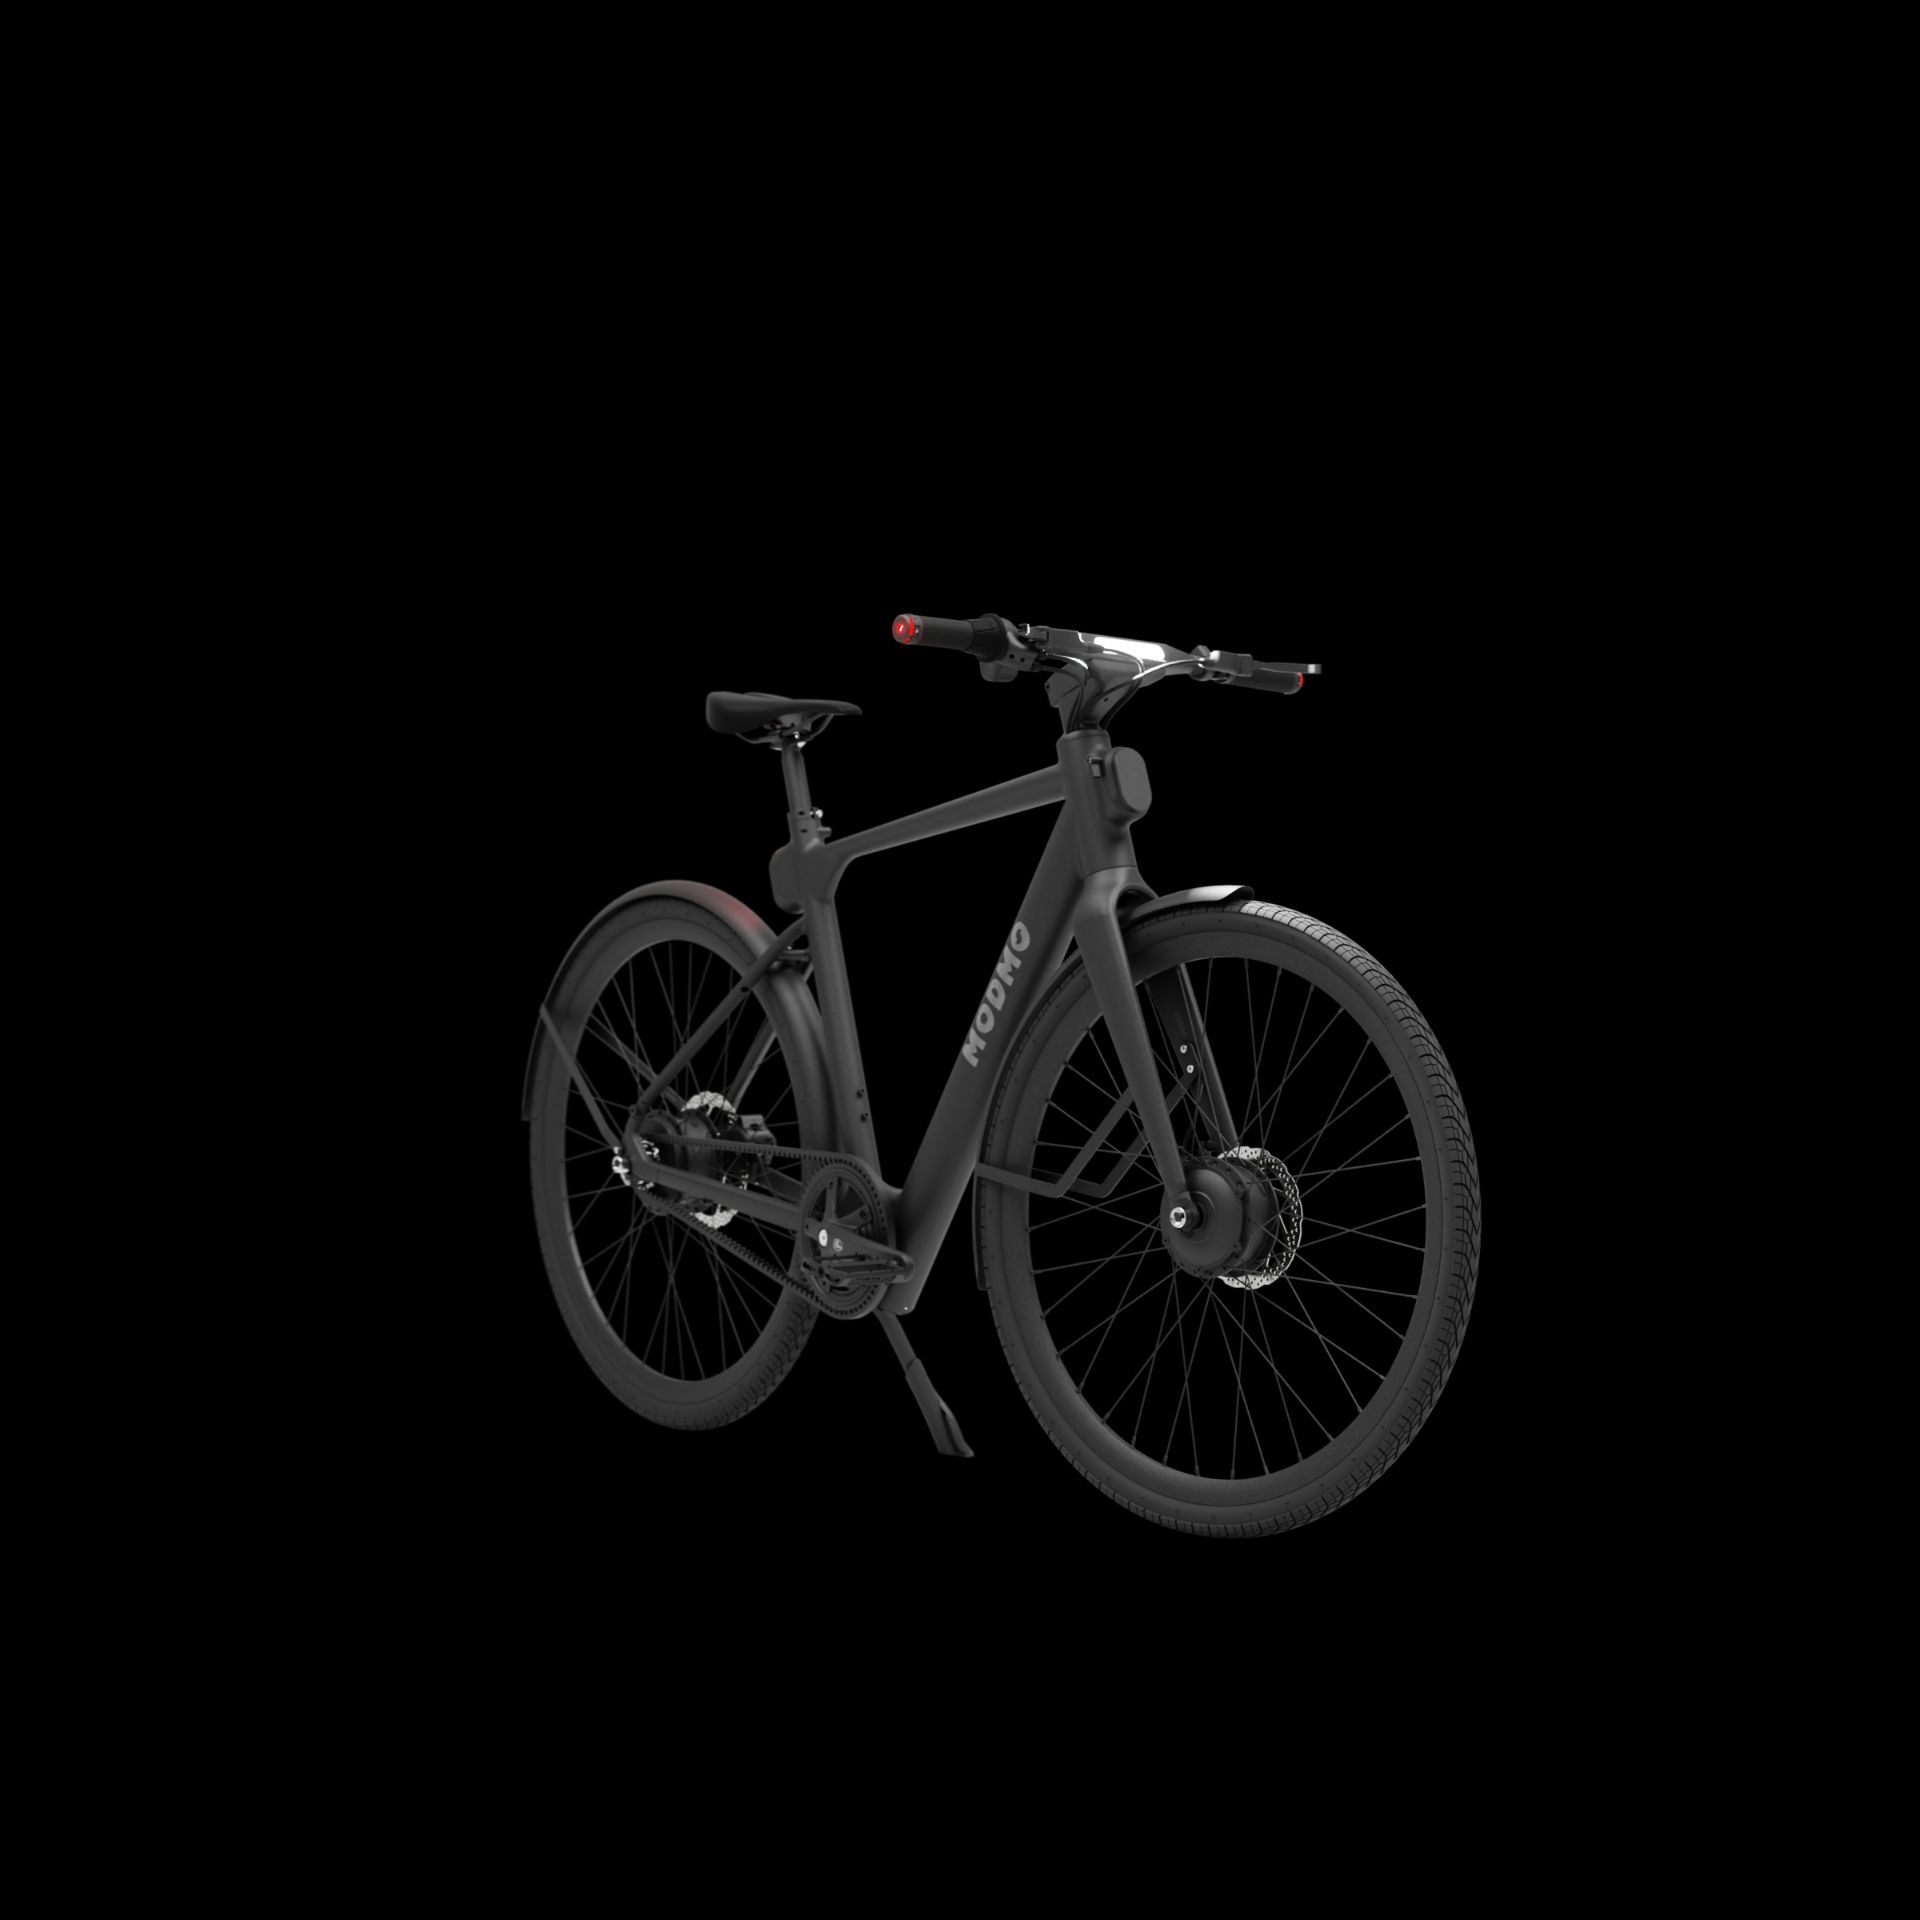 Modmo Saigon+ Electric Bicycle - RRP £2800 - Size L (Rider 175-190cm) - Image 2 of 21